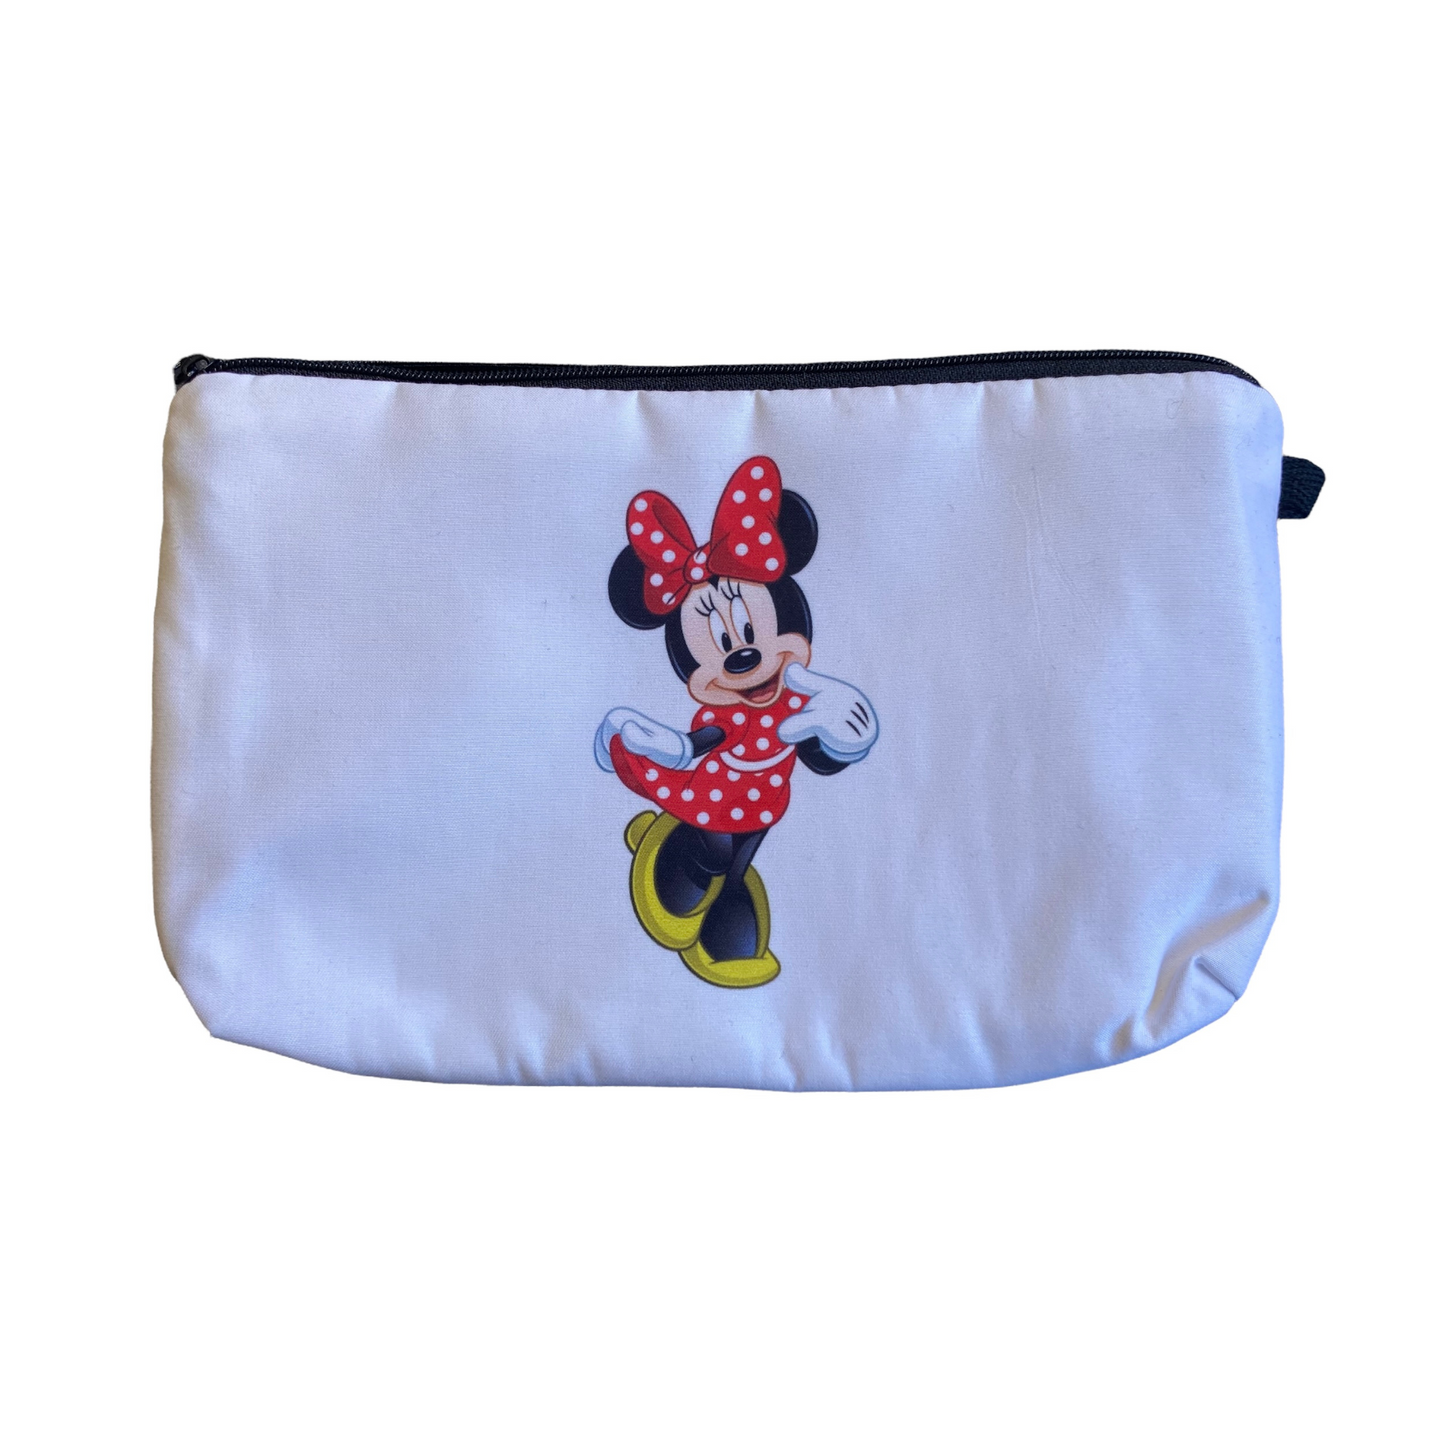 Soft Padded Zipper Purse Pen & Pencil Cases SPIRIT SPARKPLUGS White Minnie Mouse  